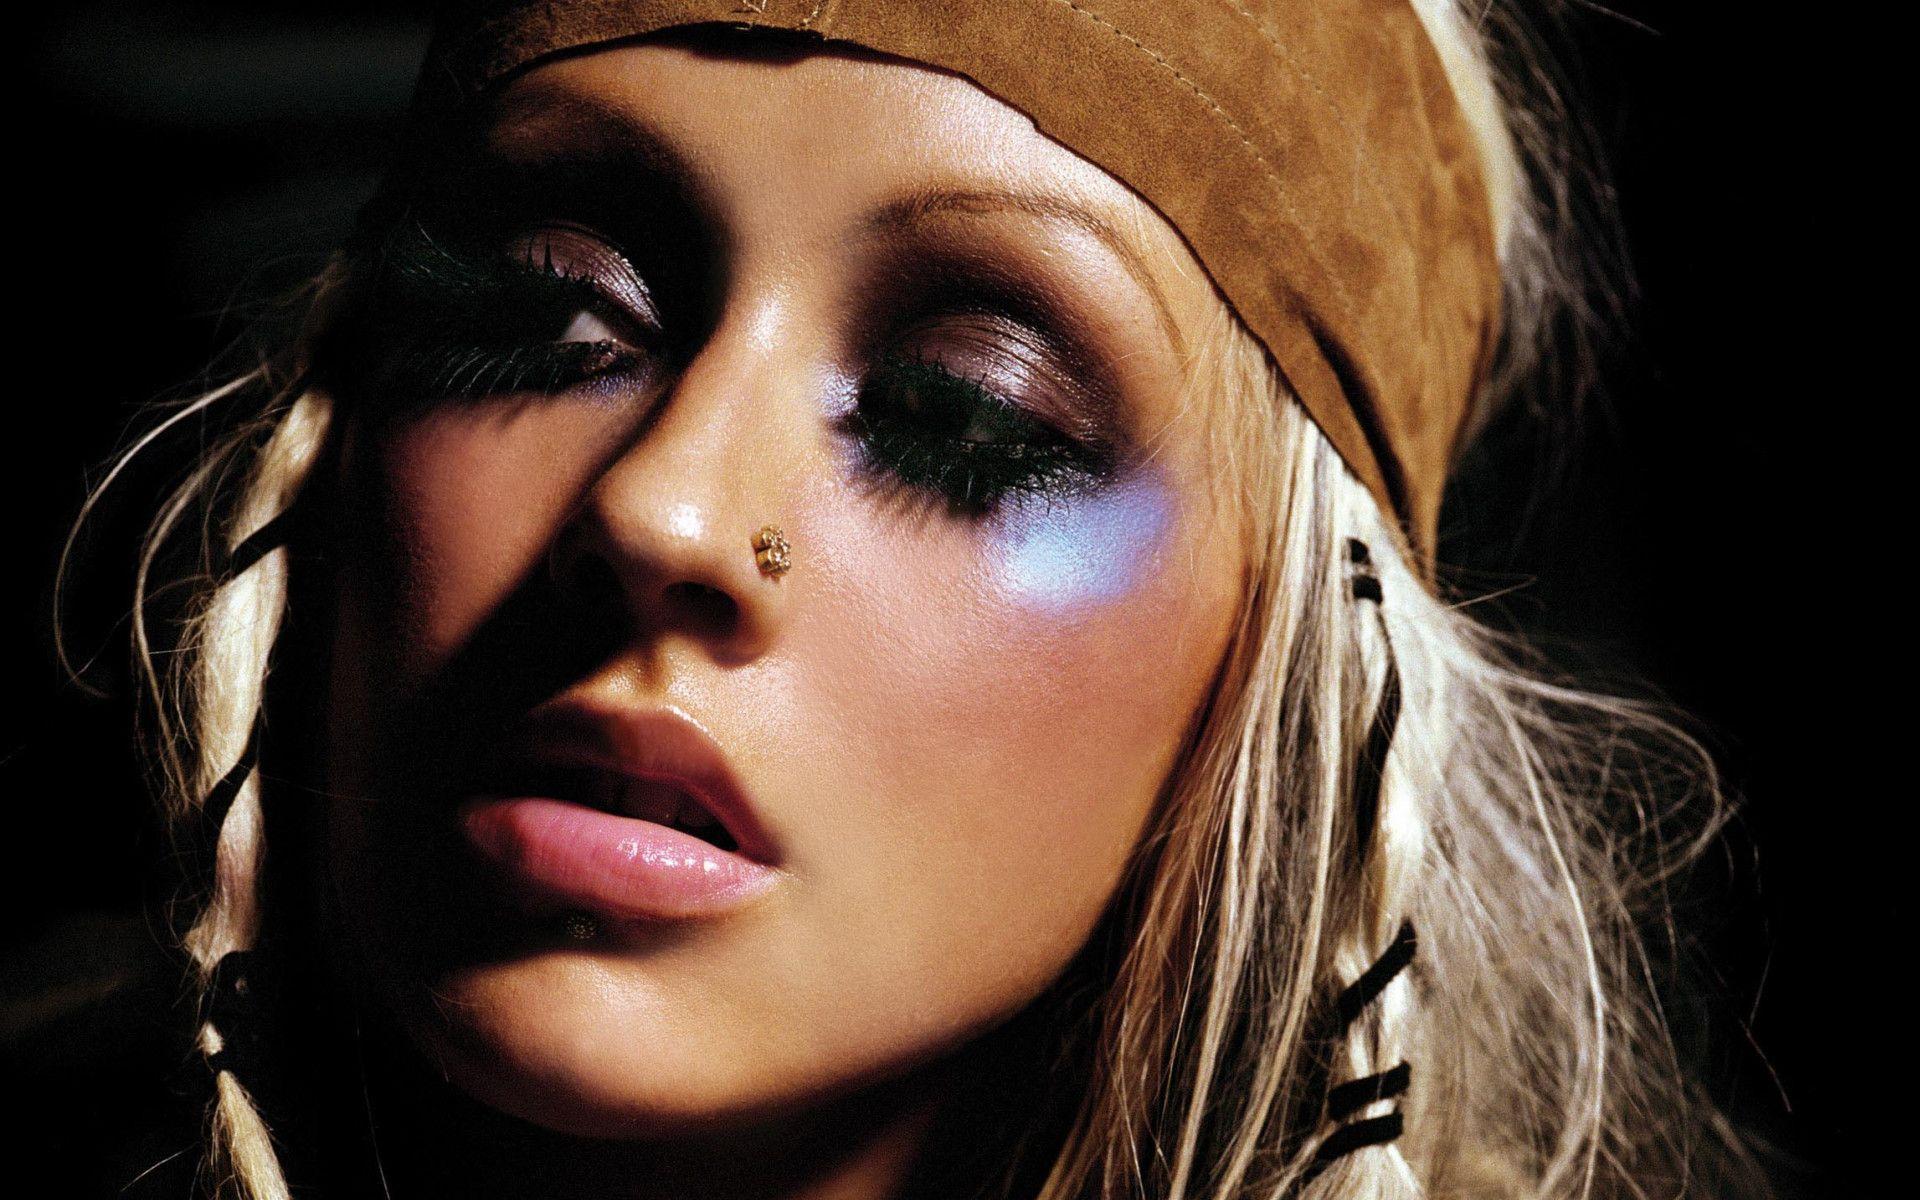 Beautiful Christina Aguilera Image 07. hdwallpaper